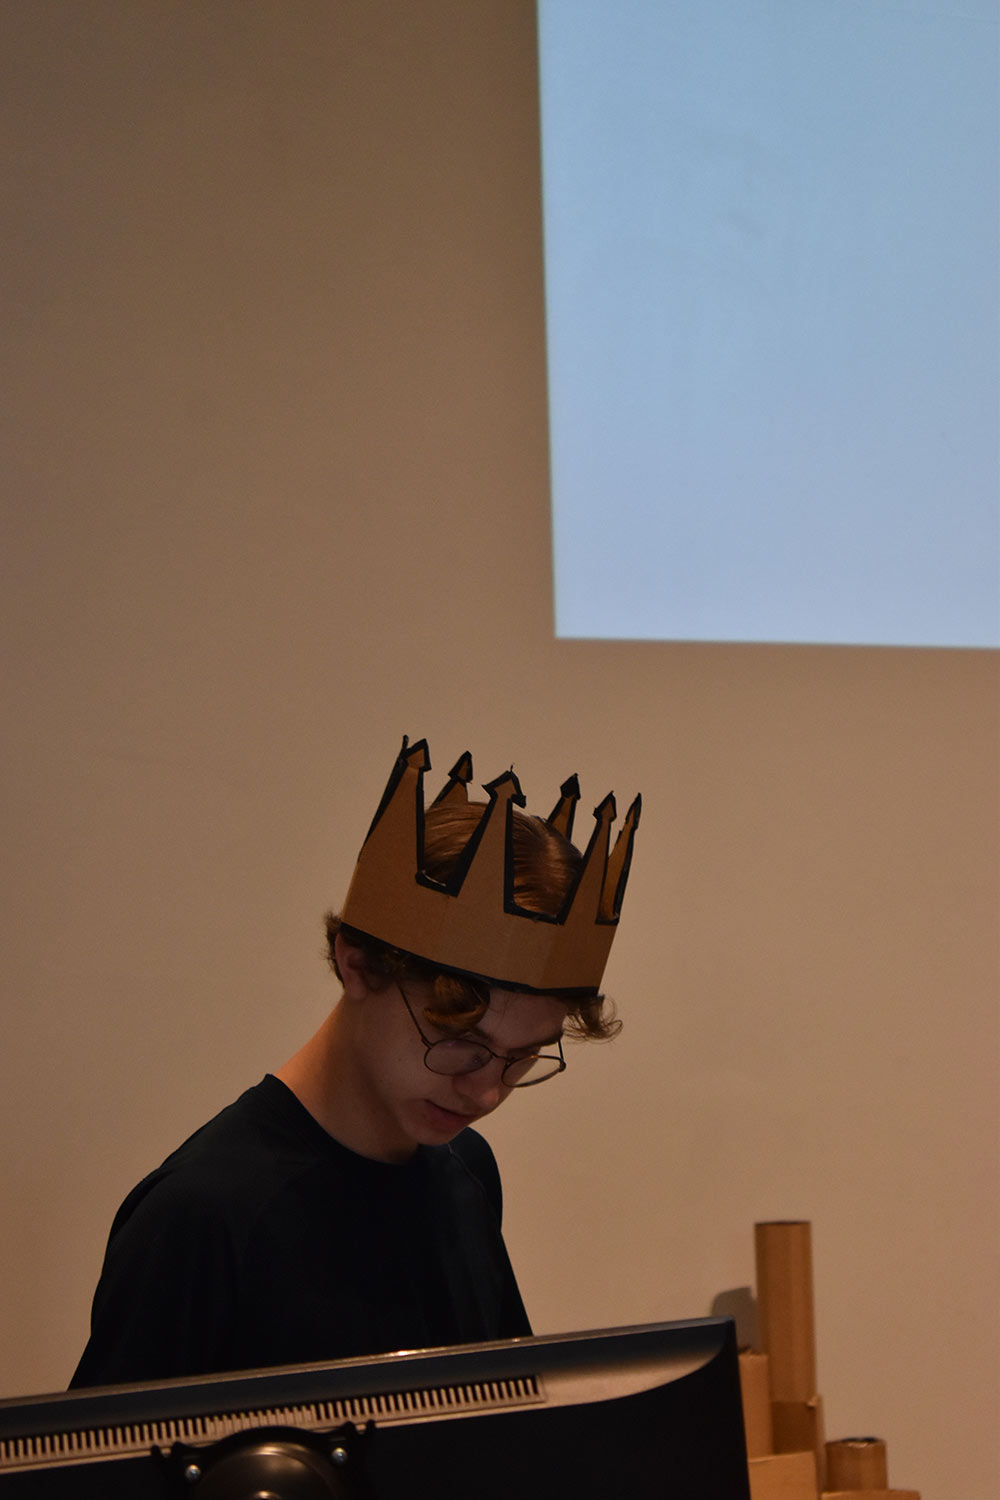 camper wearing crown made of cardboard stands behind lecturn